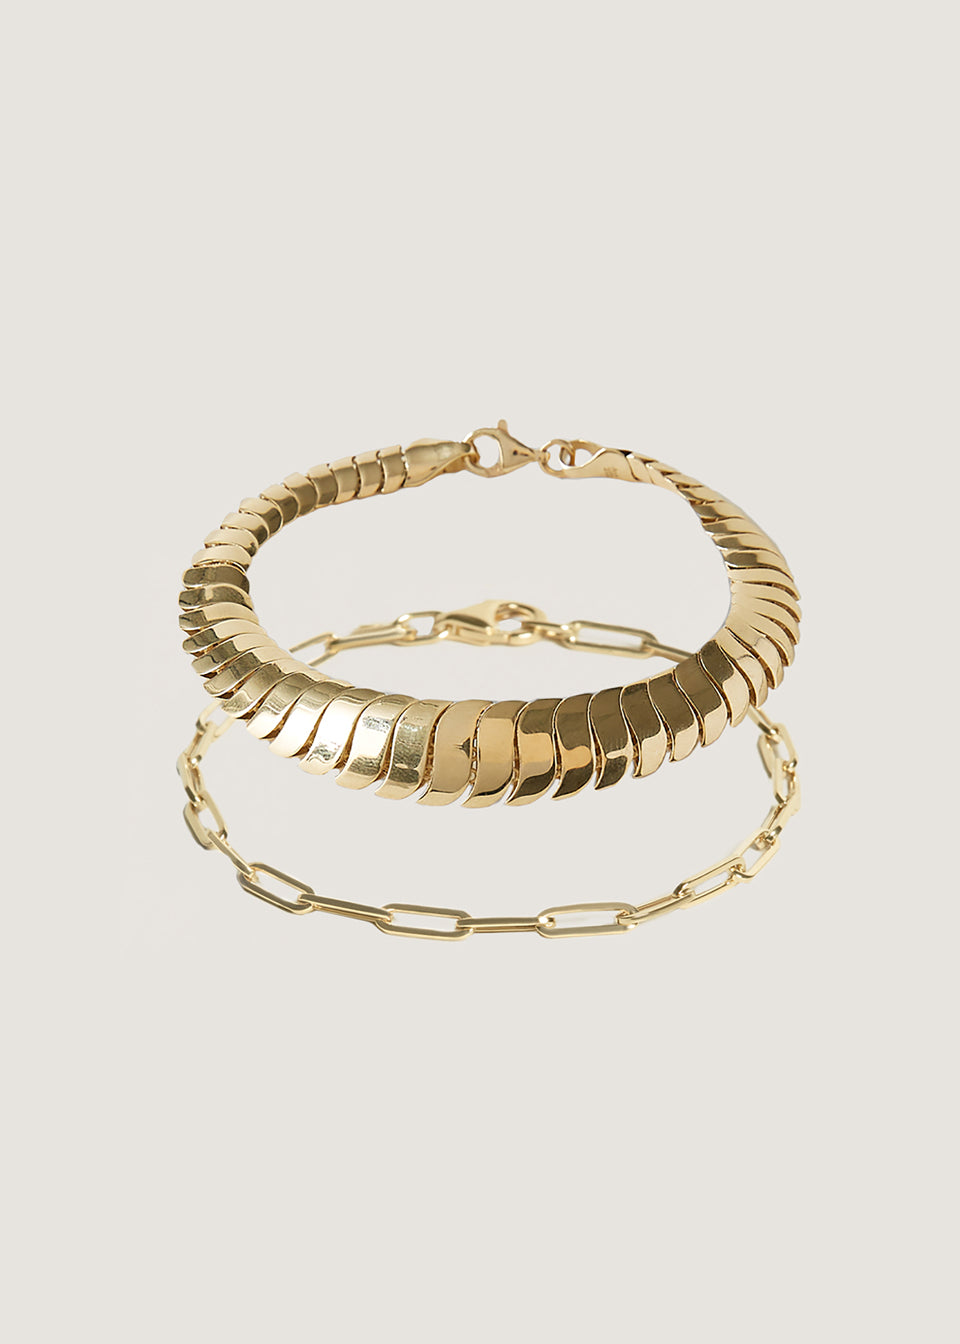 alt="Cobra II & Petite Link Chain Bracelet Stack"